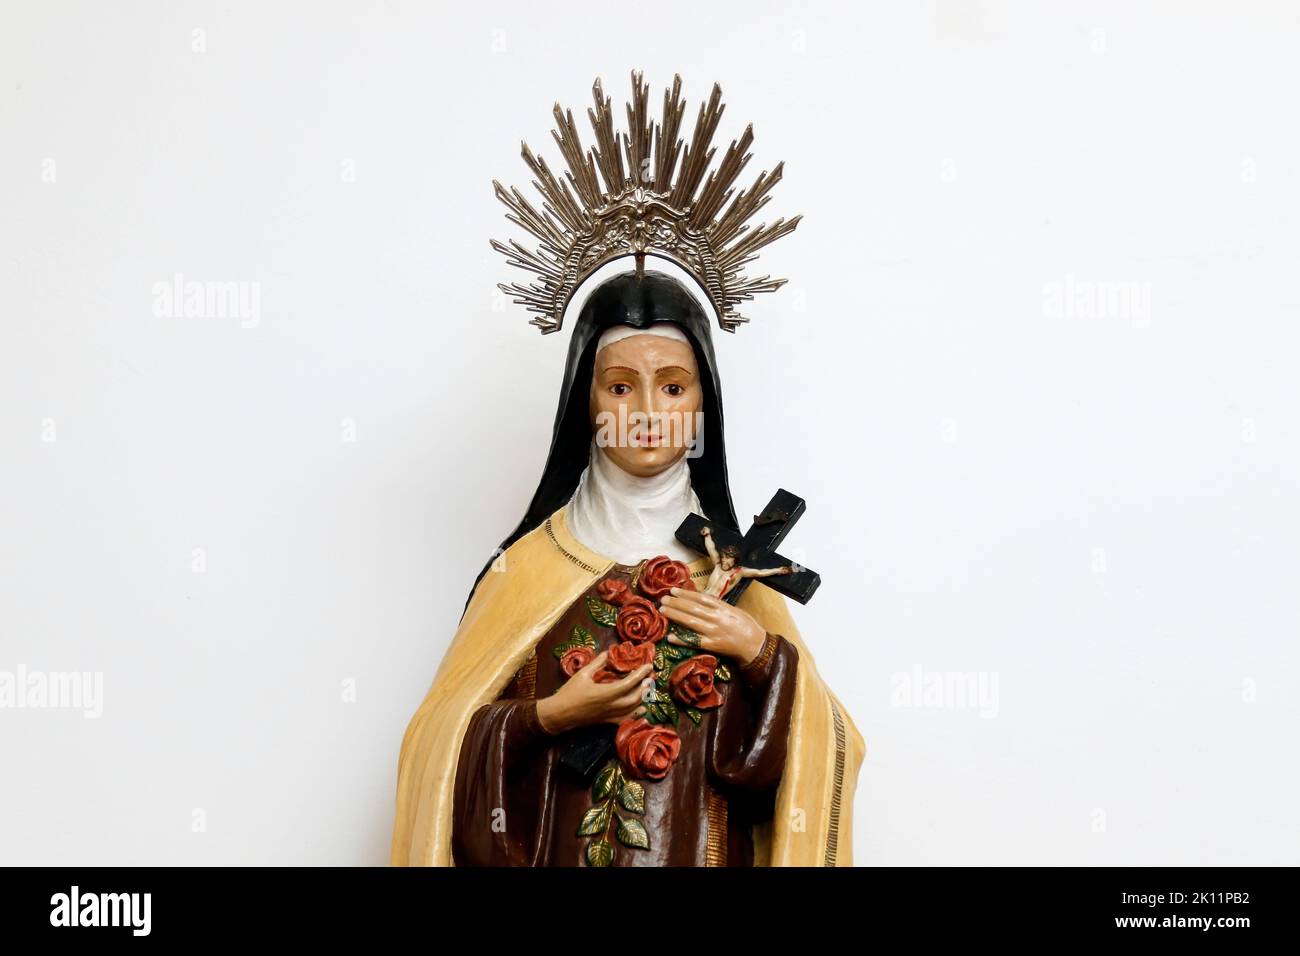 Statue of Saint Therese of the Child Jesus, Therese of Lisieux - Santa Terezinha - saint of catholic religion Stock Photo